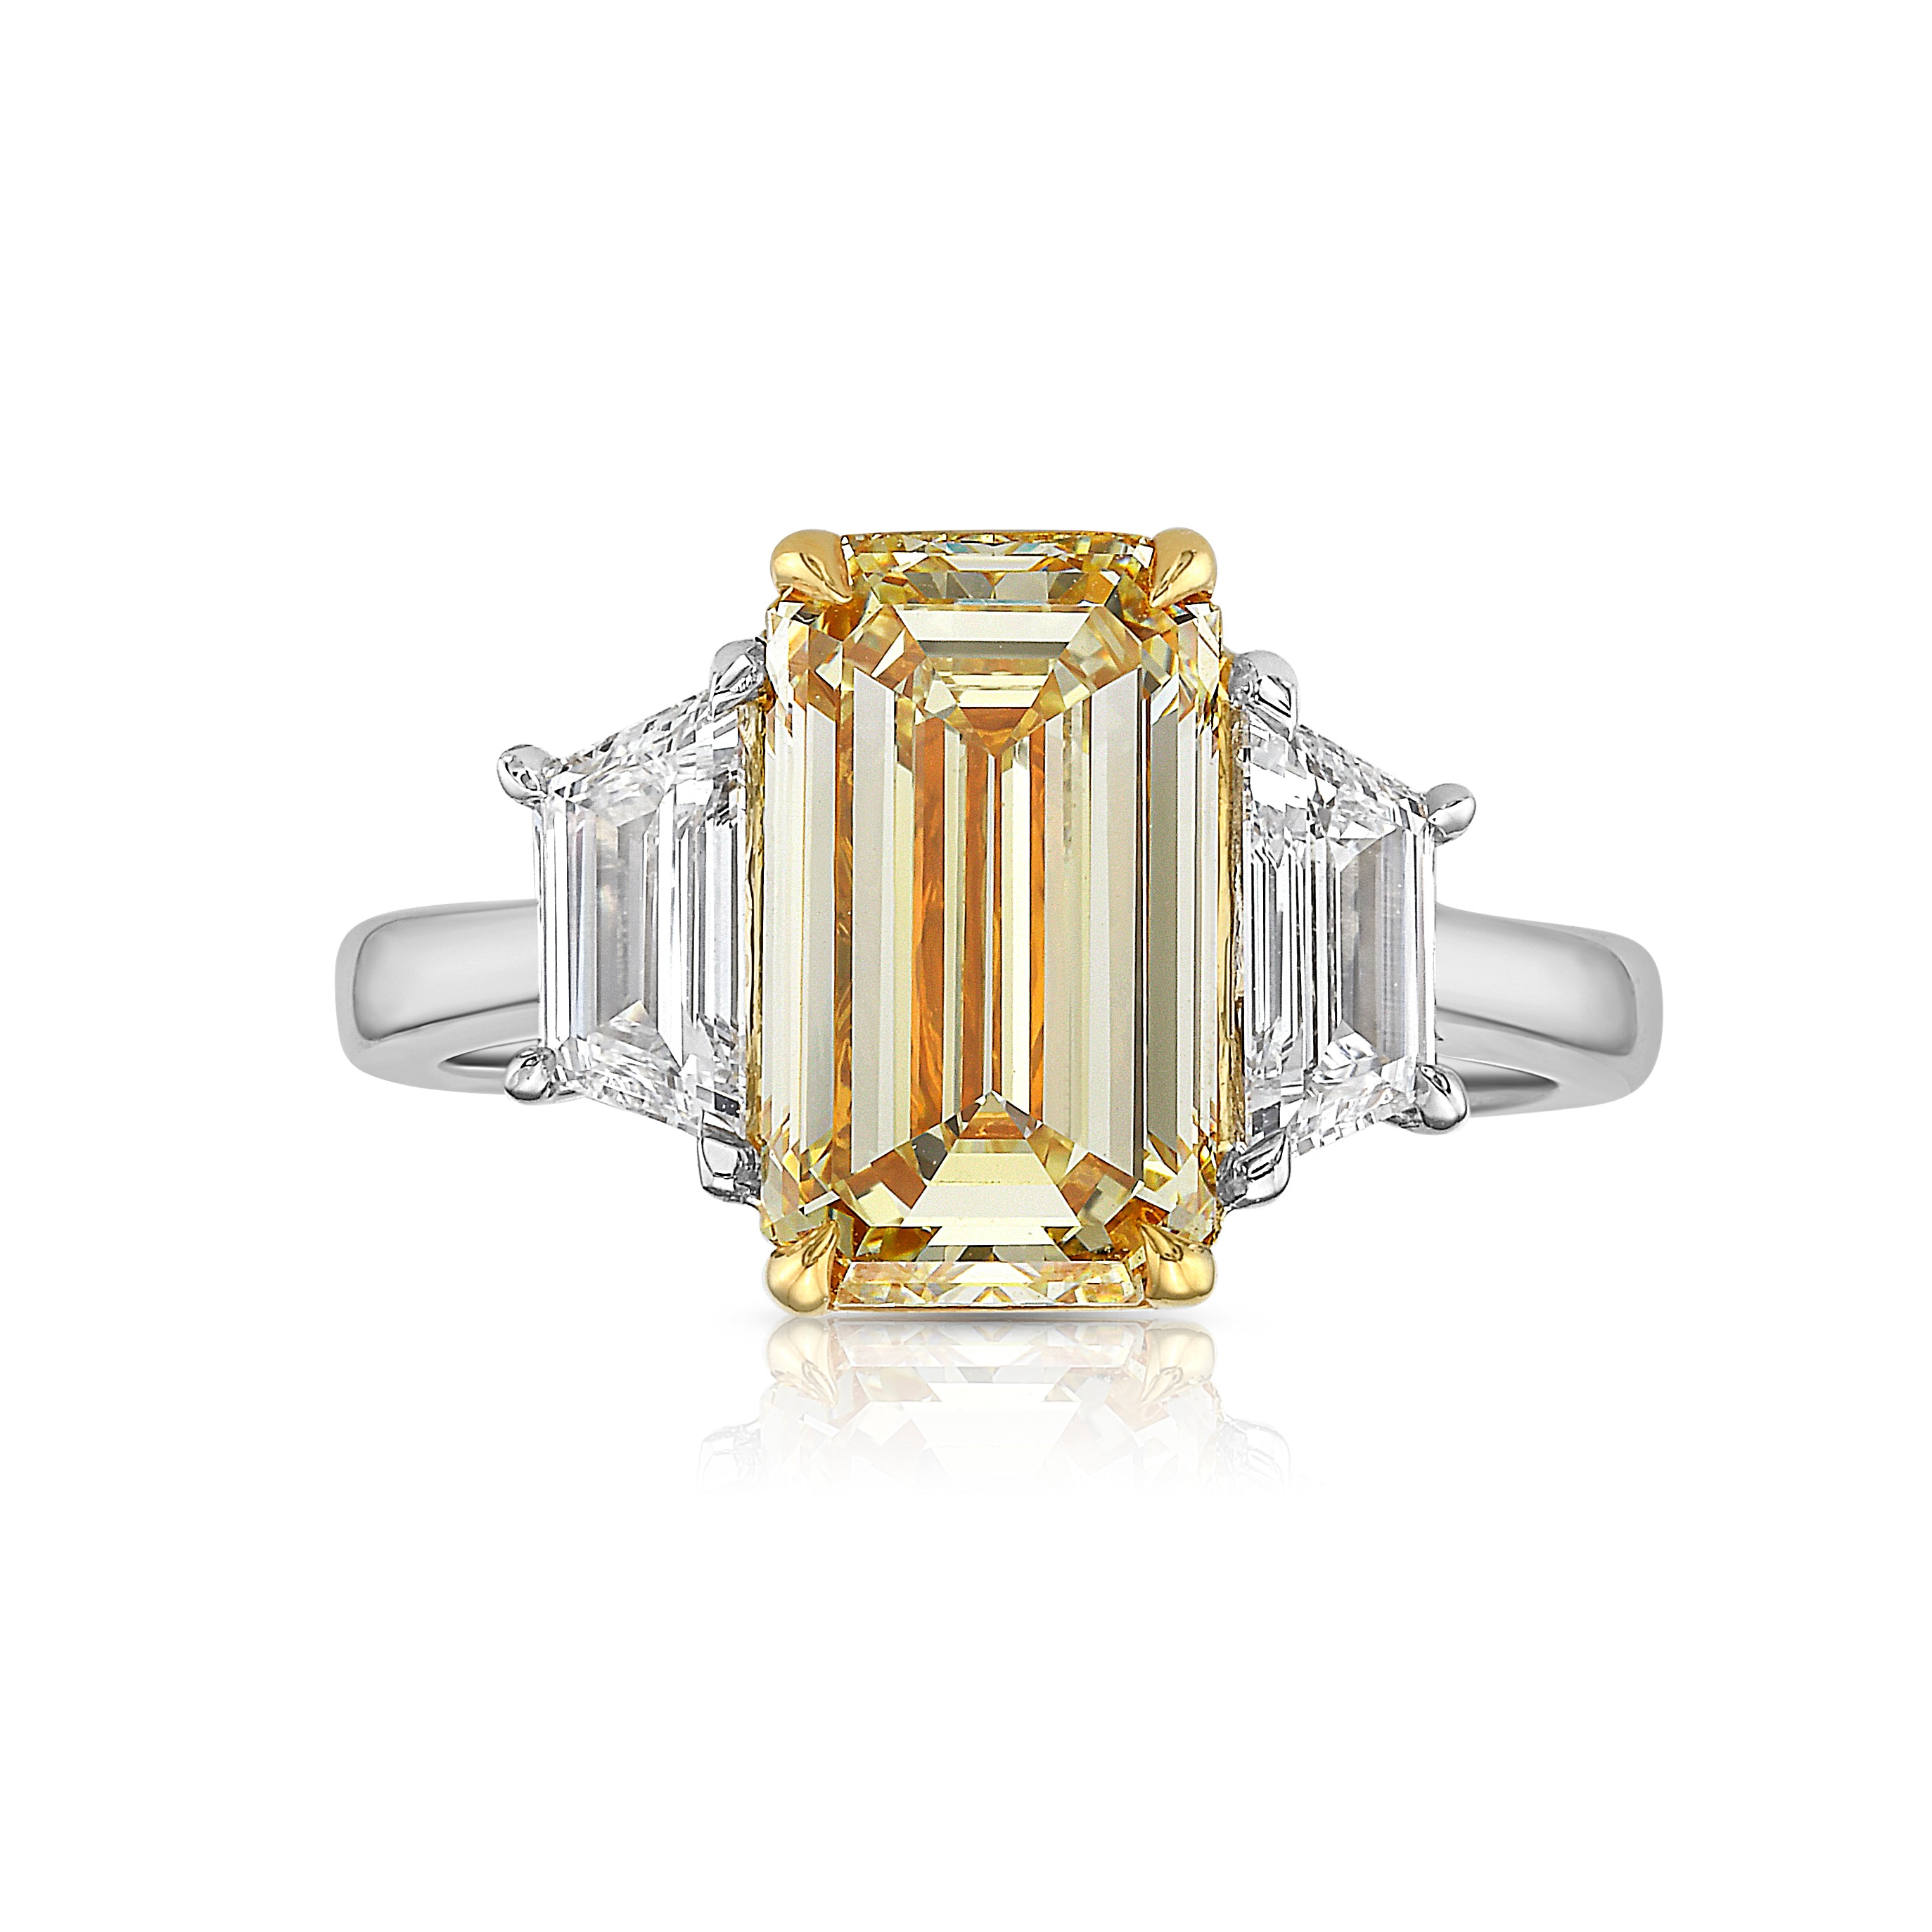 3ct Yellow Emerald Cut Diamond Ring